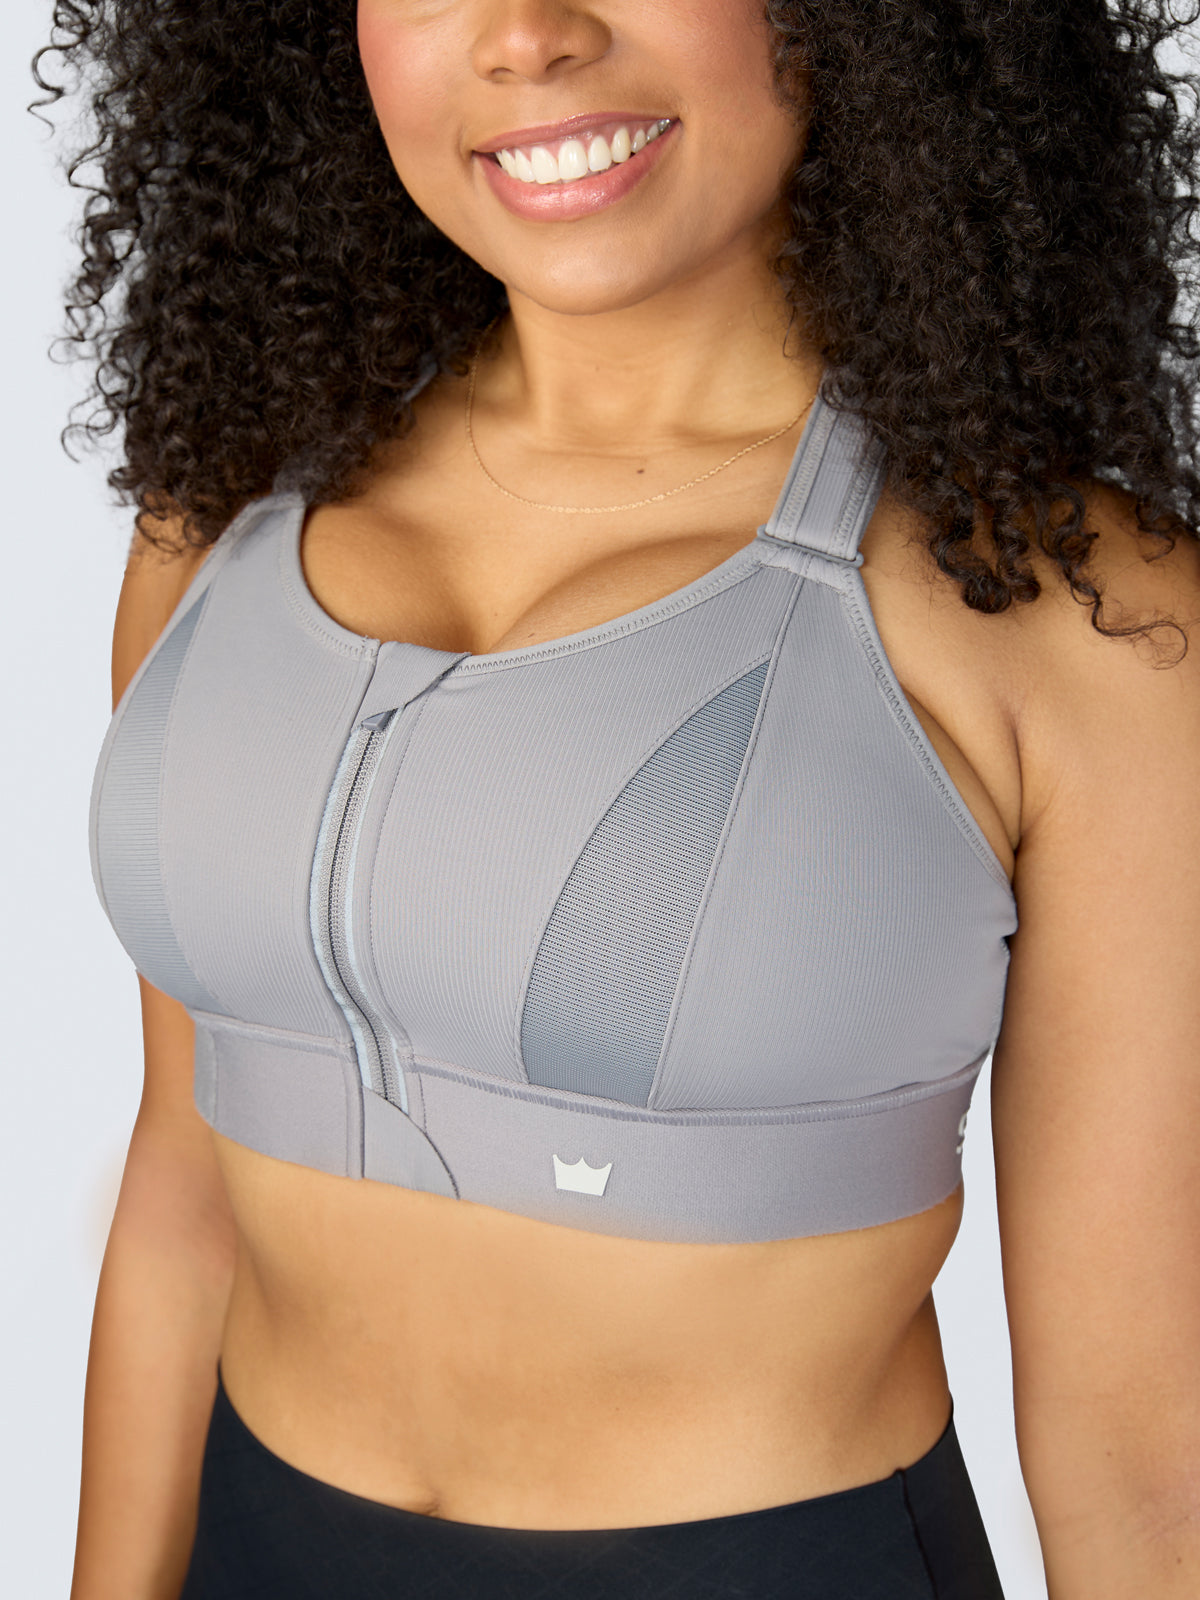 Shefit Saleunisex High-impact Sports Bra - Quick Dry Nylon Crop Top For  Yoga & Running